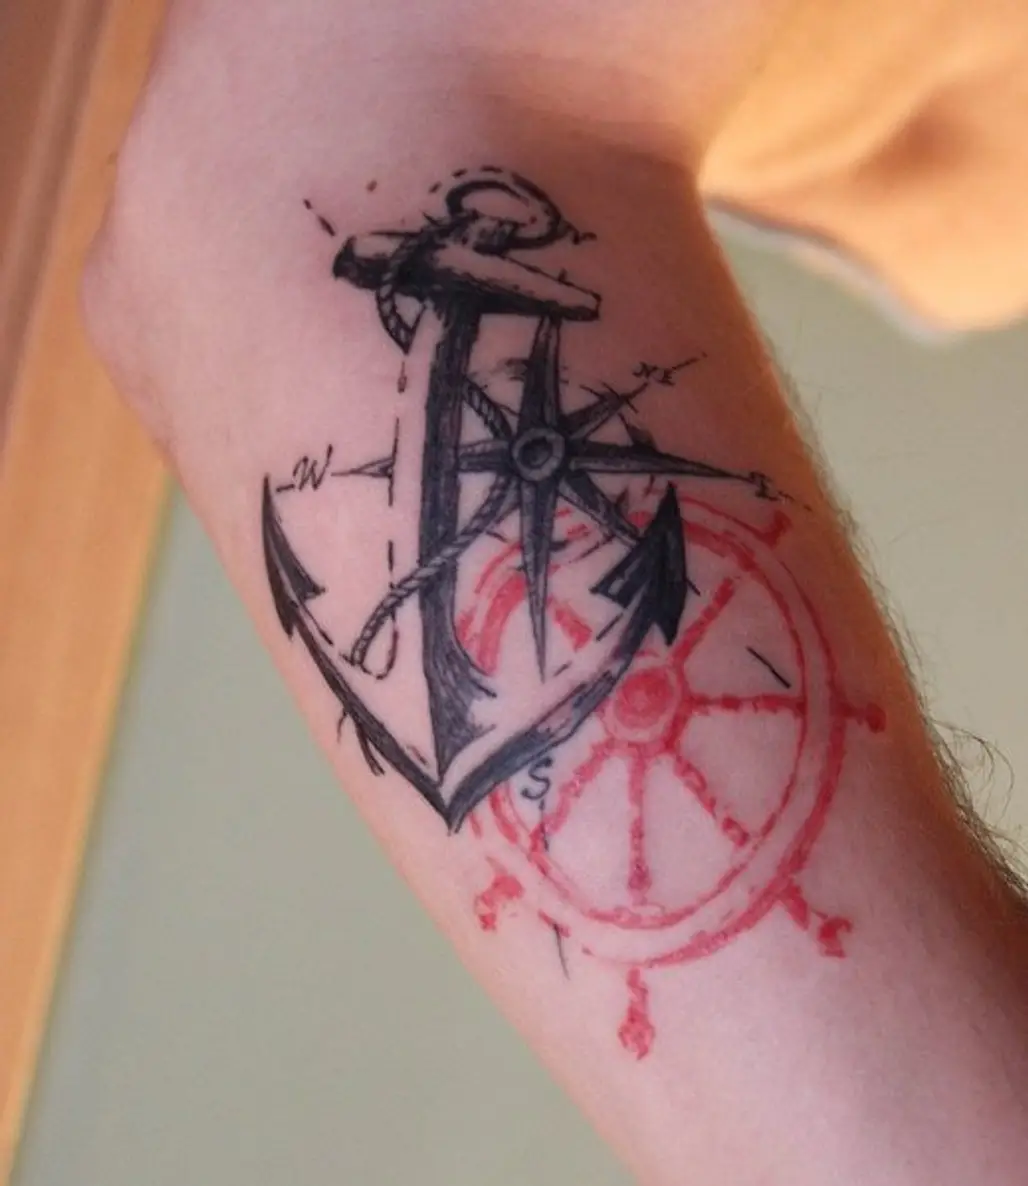 tattoo,arm,hand,leg,human body,